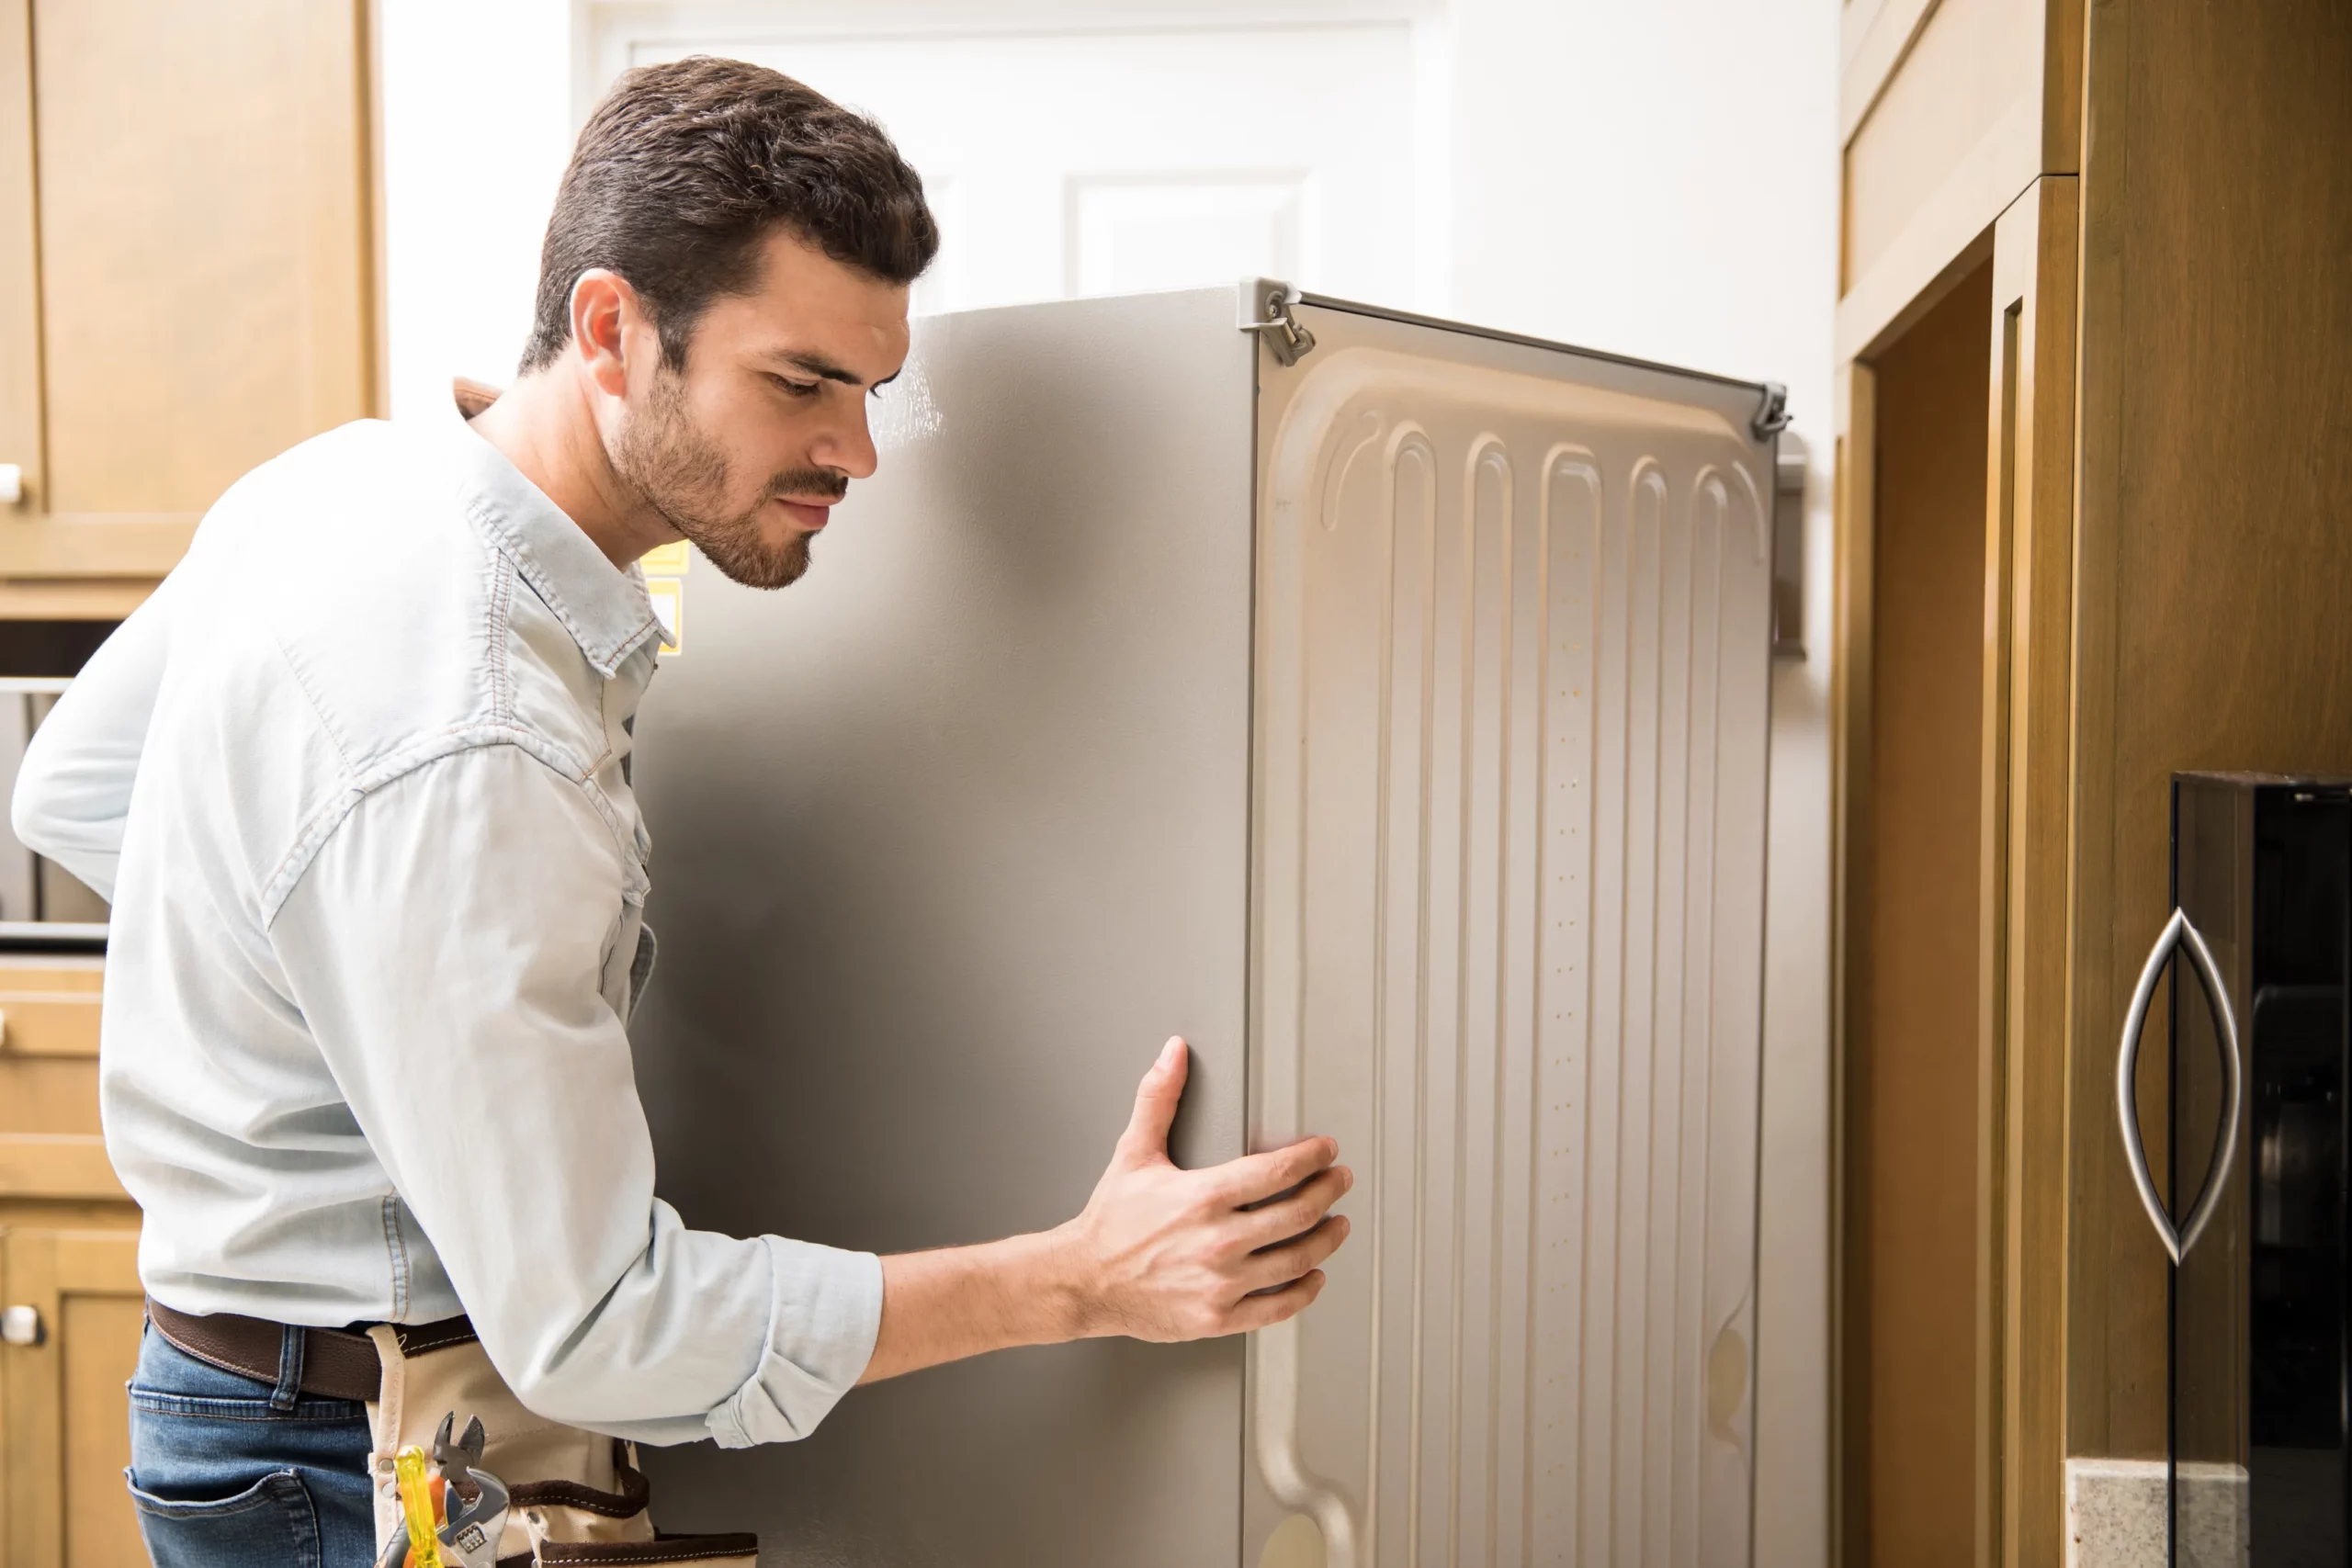 Appliance Repair Man Checking fridge